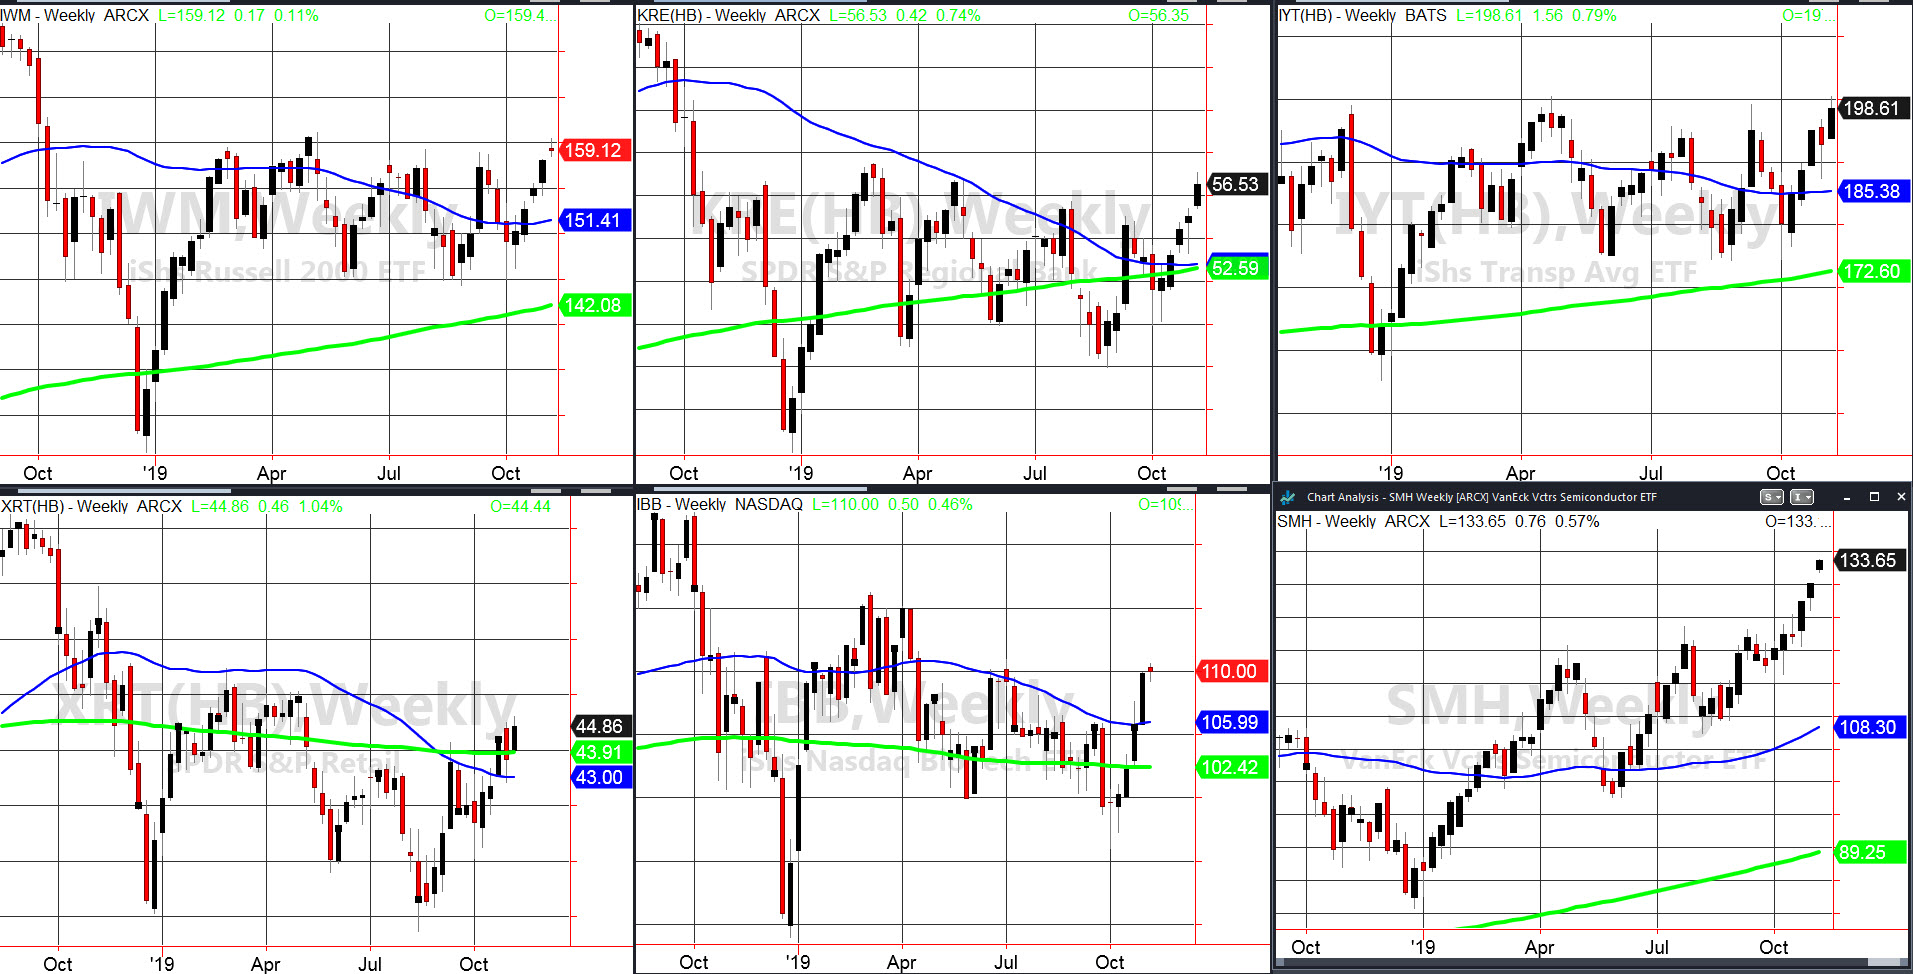 Market Indices ETFs Weekly Charts